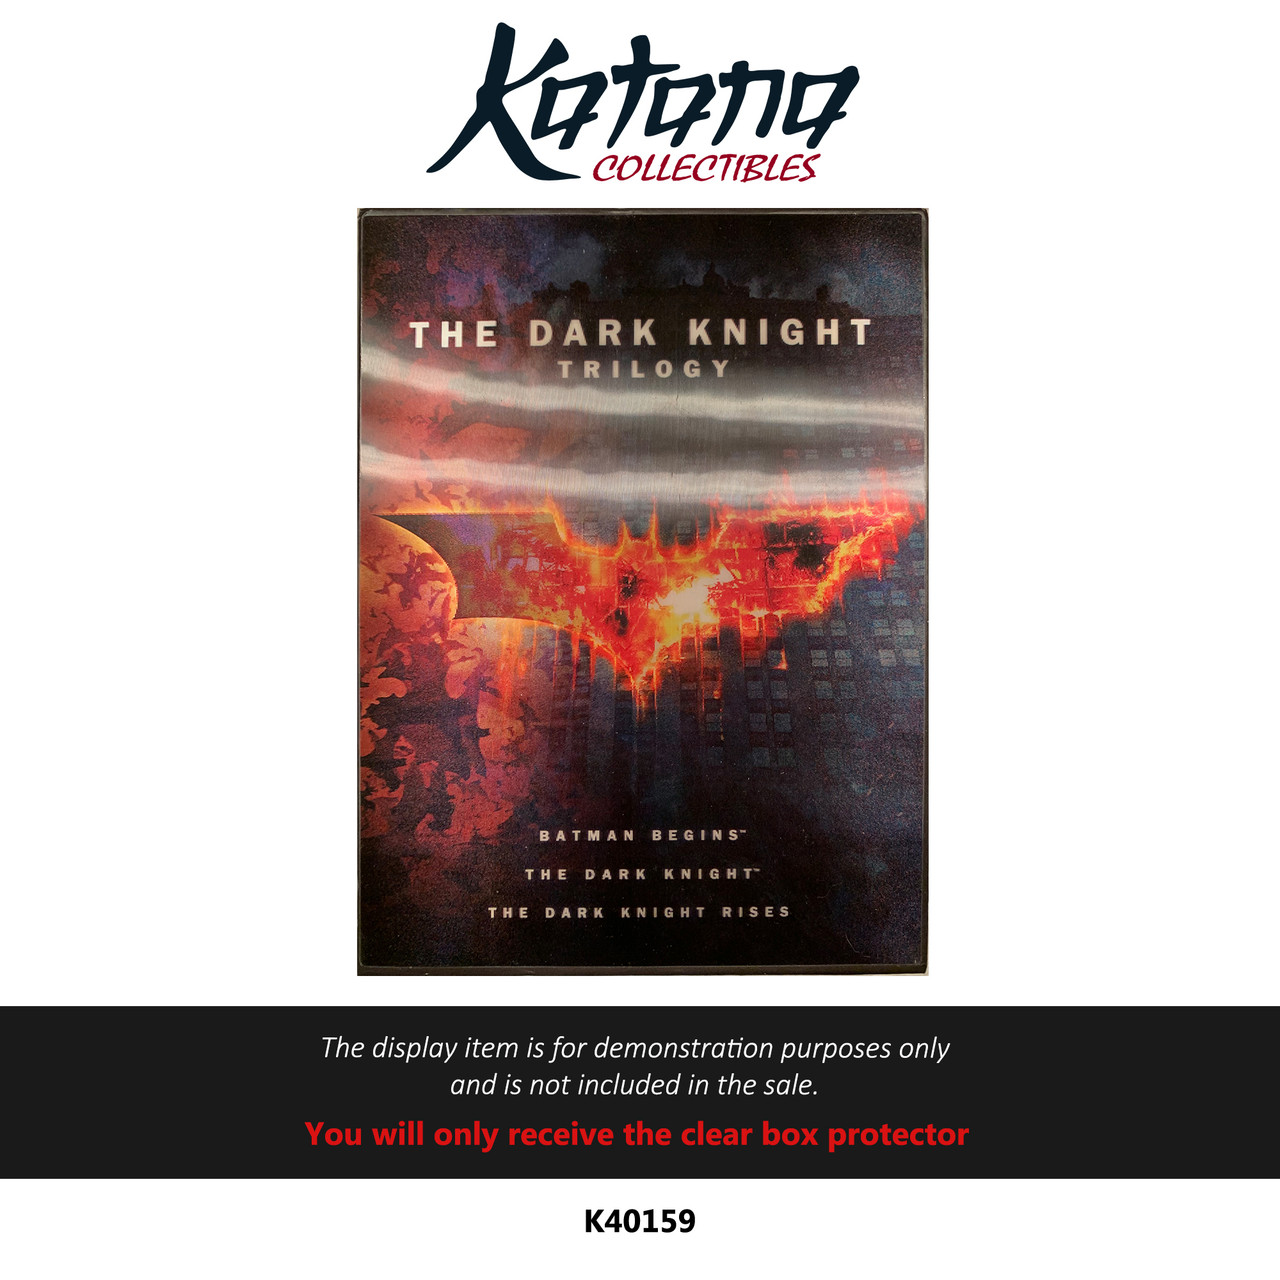 Katana Collectibles Protector For Dark Knight Trilogy Dvd